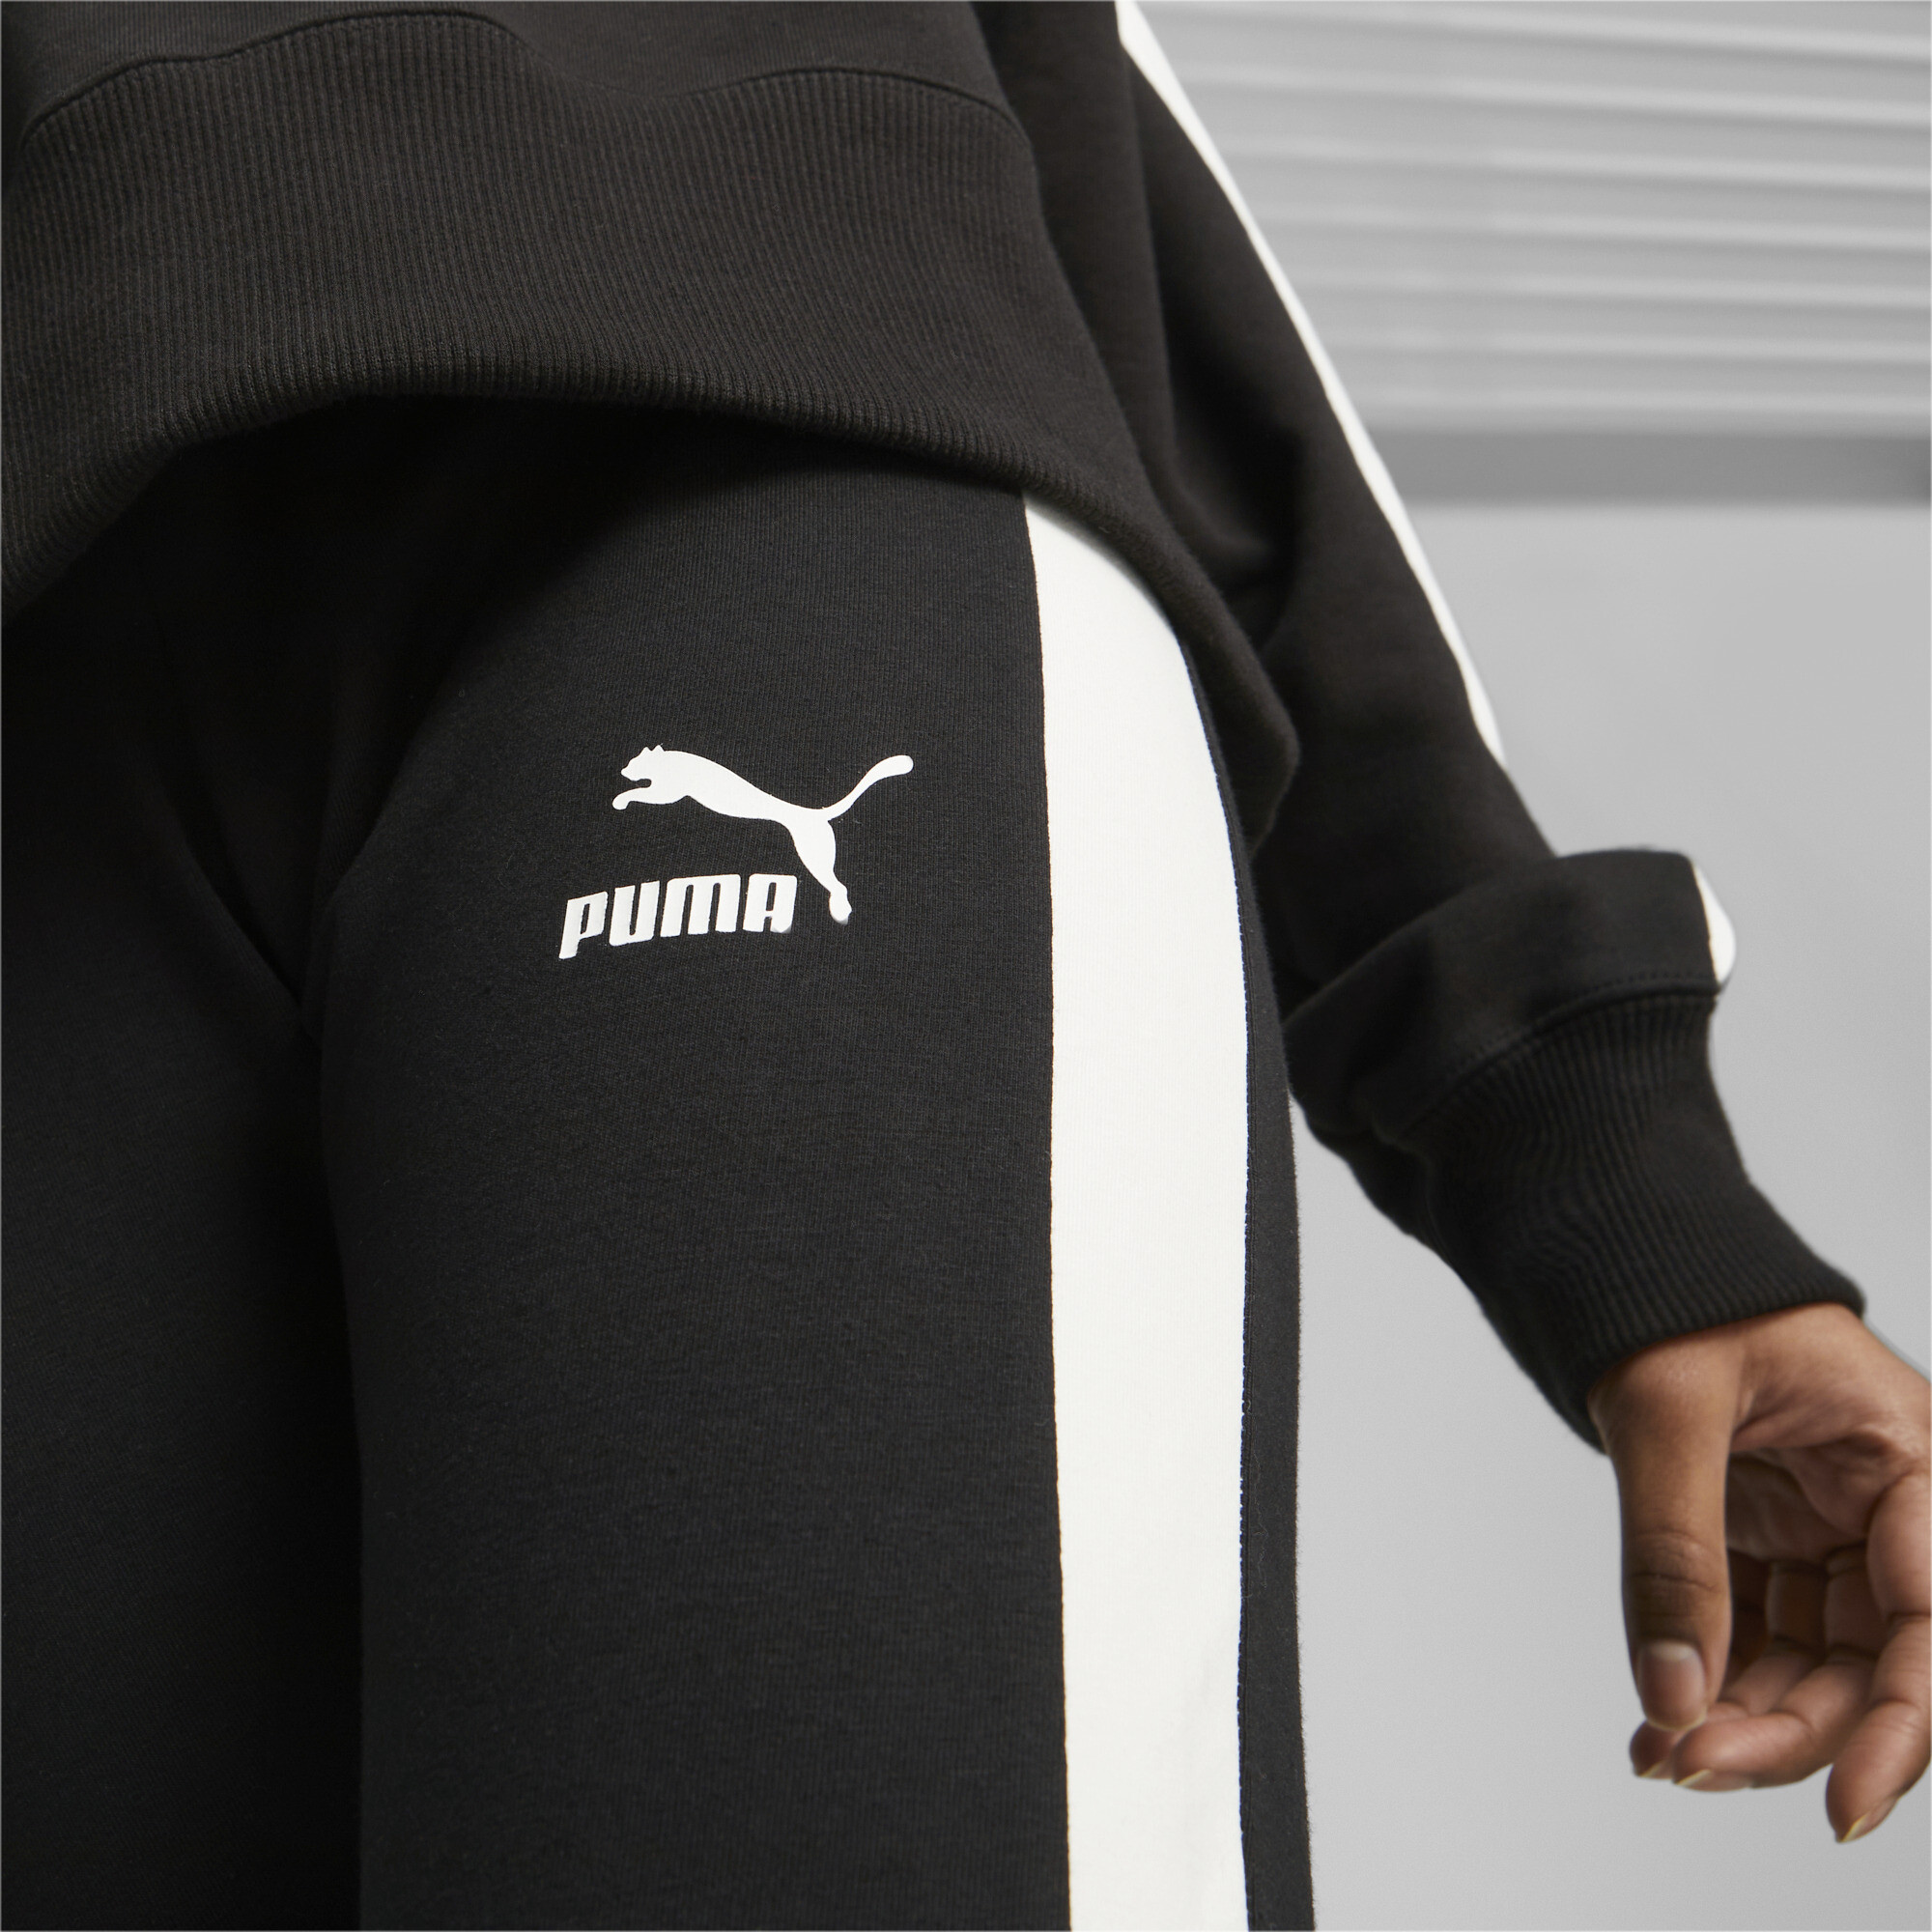 Women's PUMA Iconic T7 Mid-Rise Leggings In Black, Size 3XL